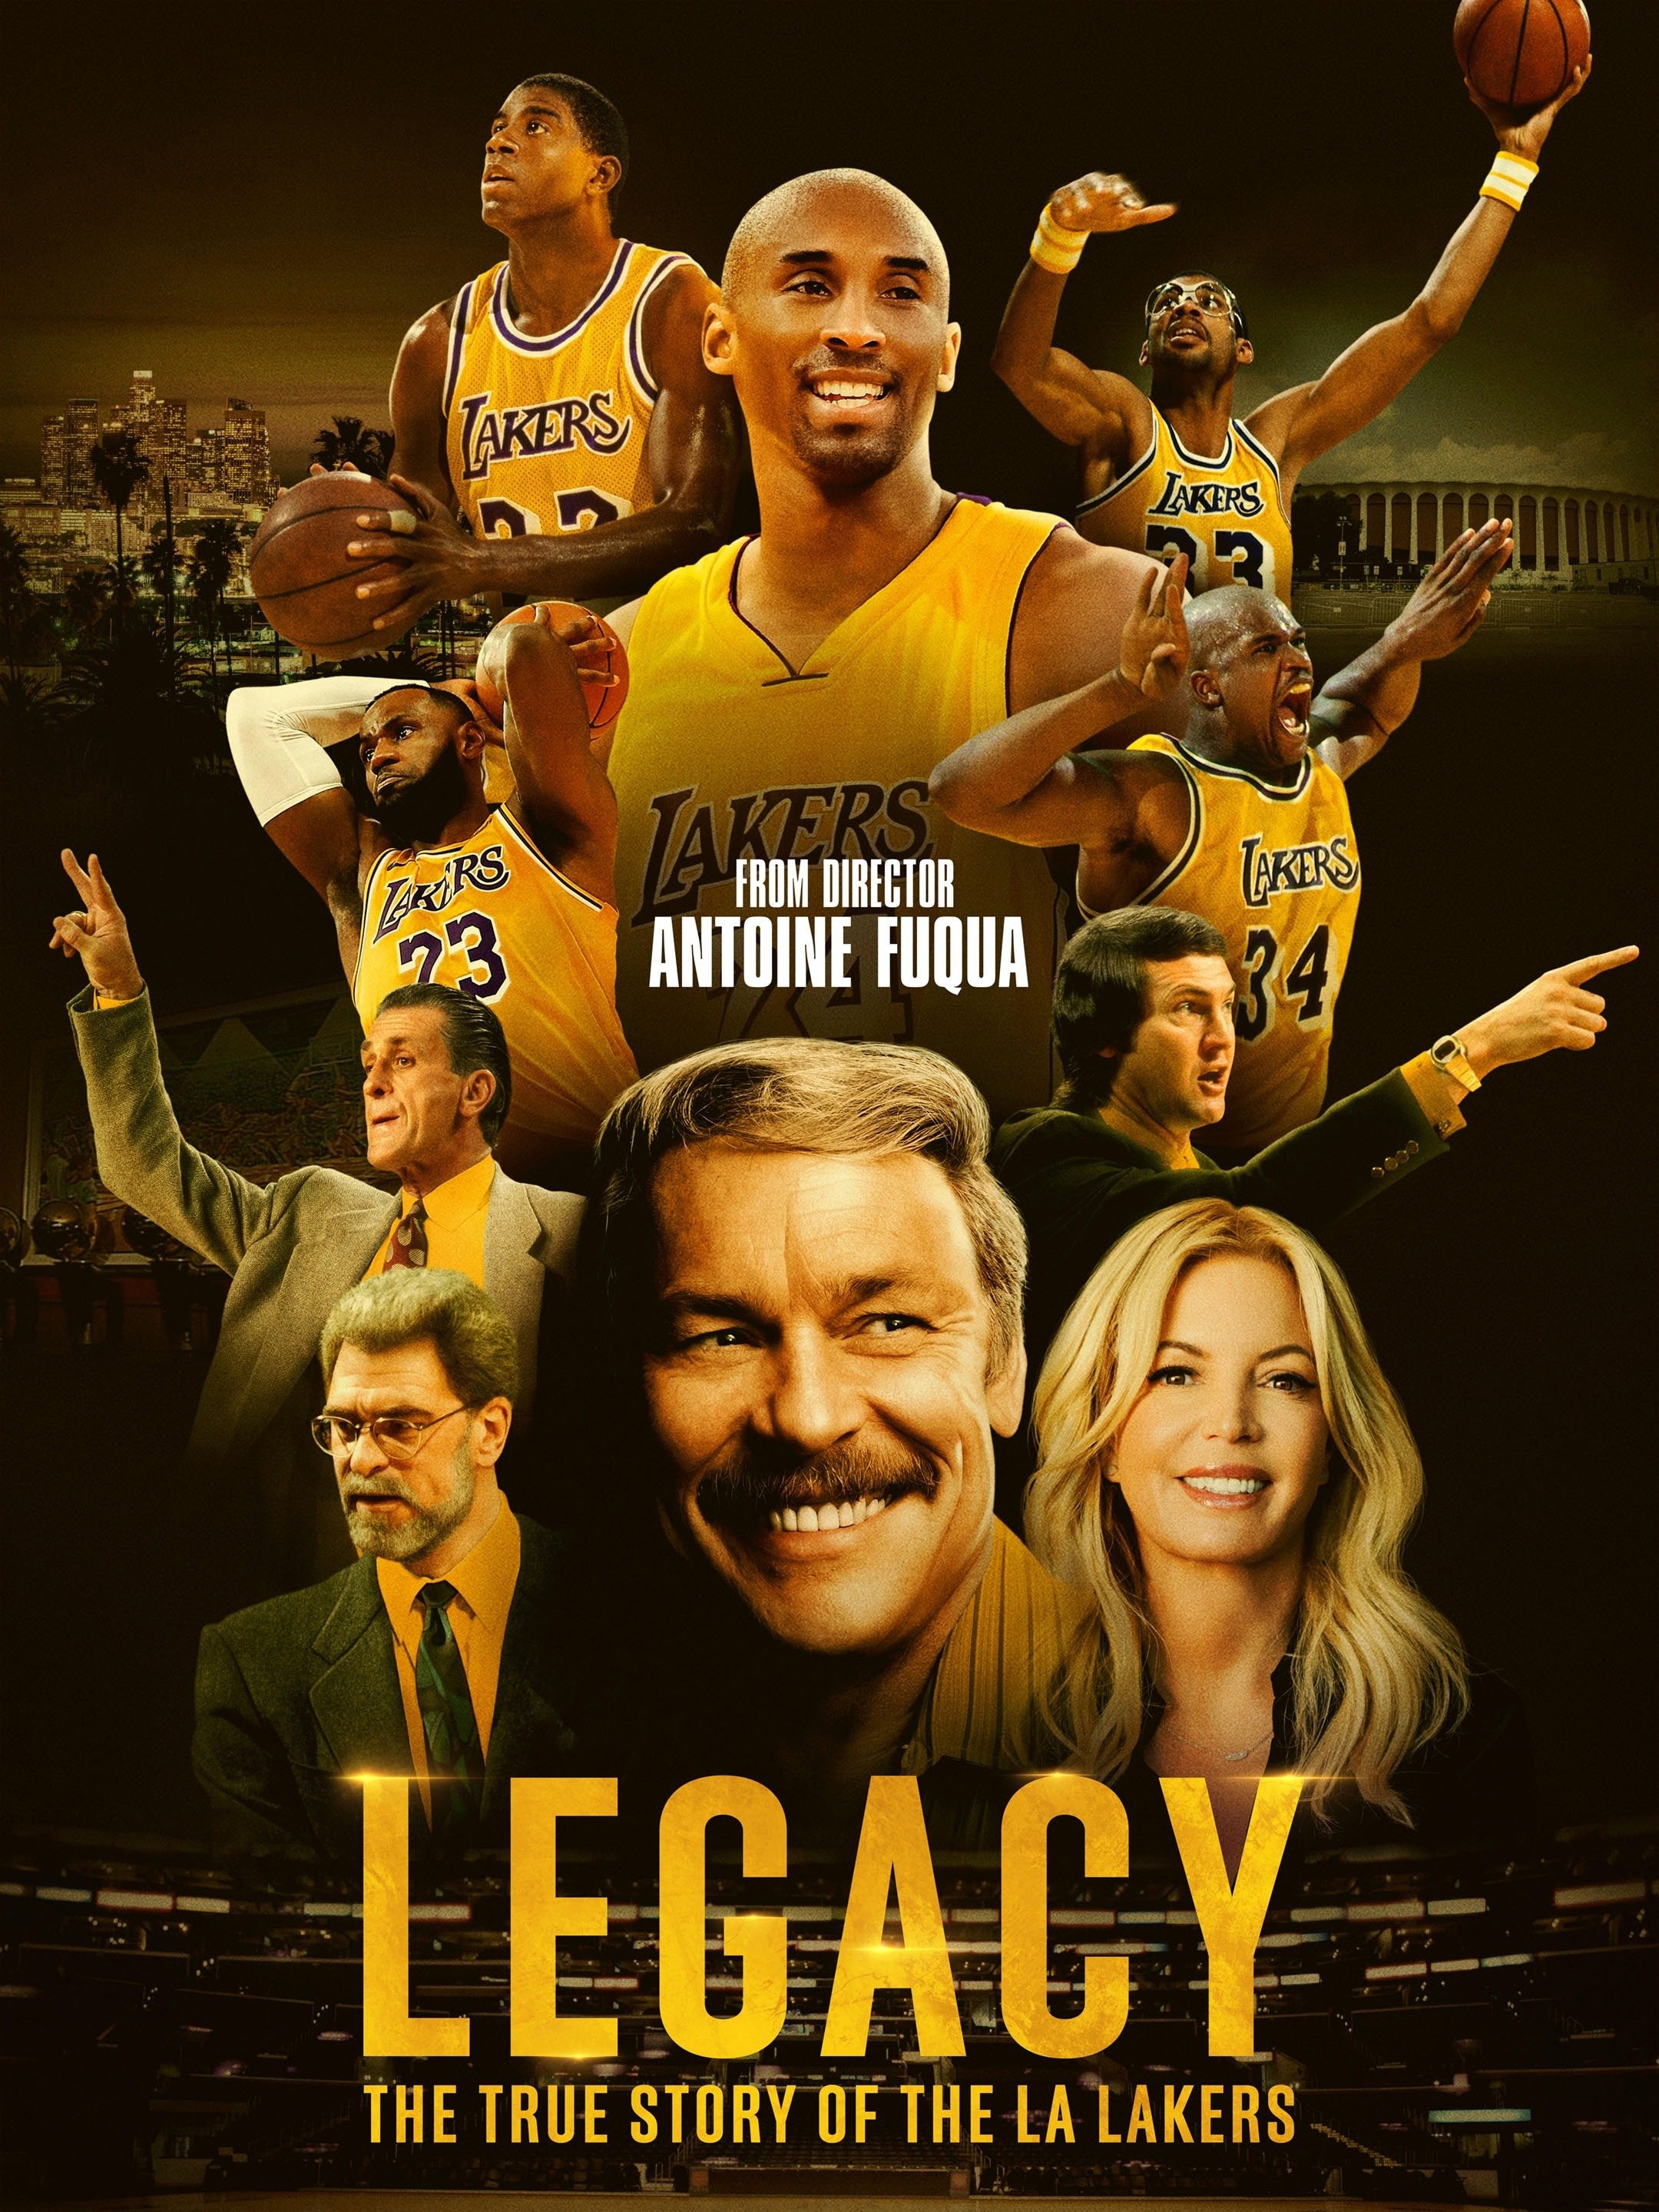 Lakers Run LA  Doc Hollywood